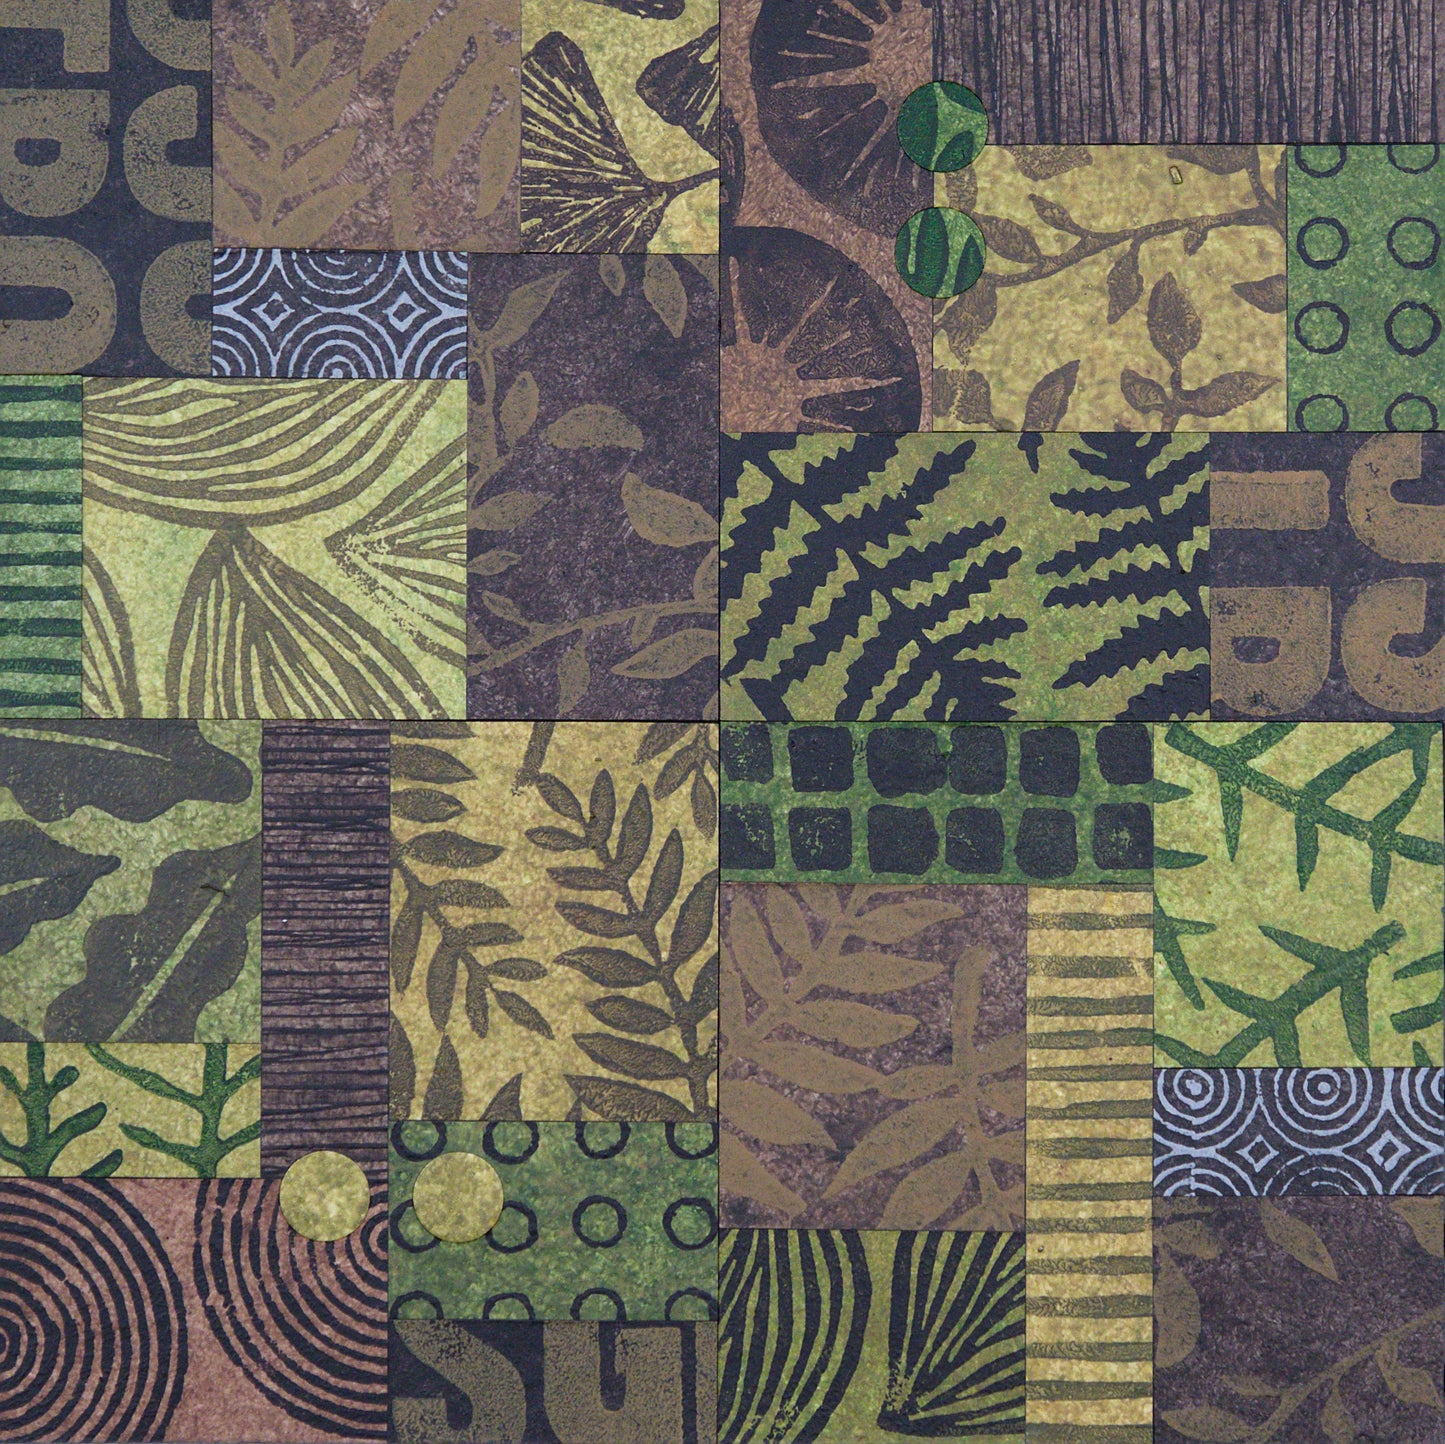 Forest Floor III - 10" x 10" Collage